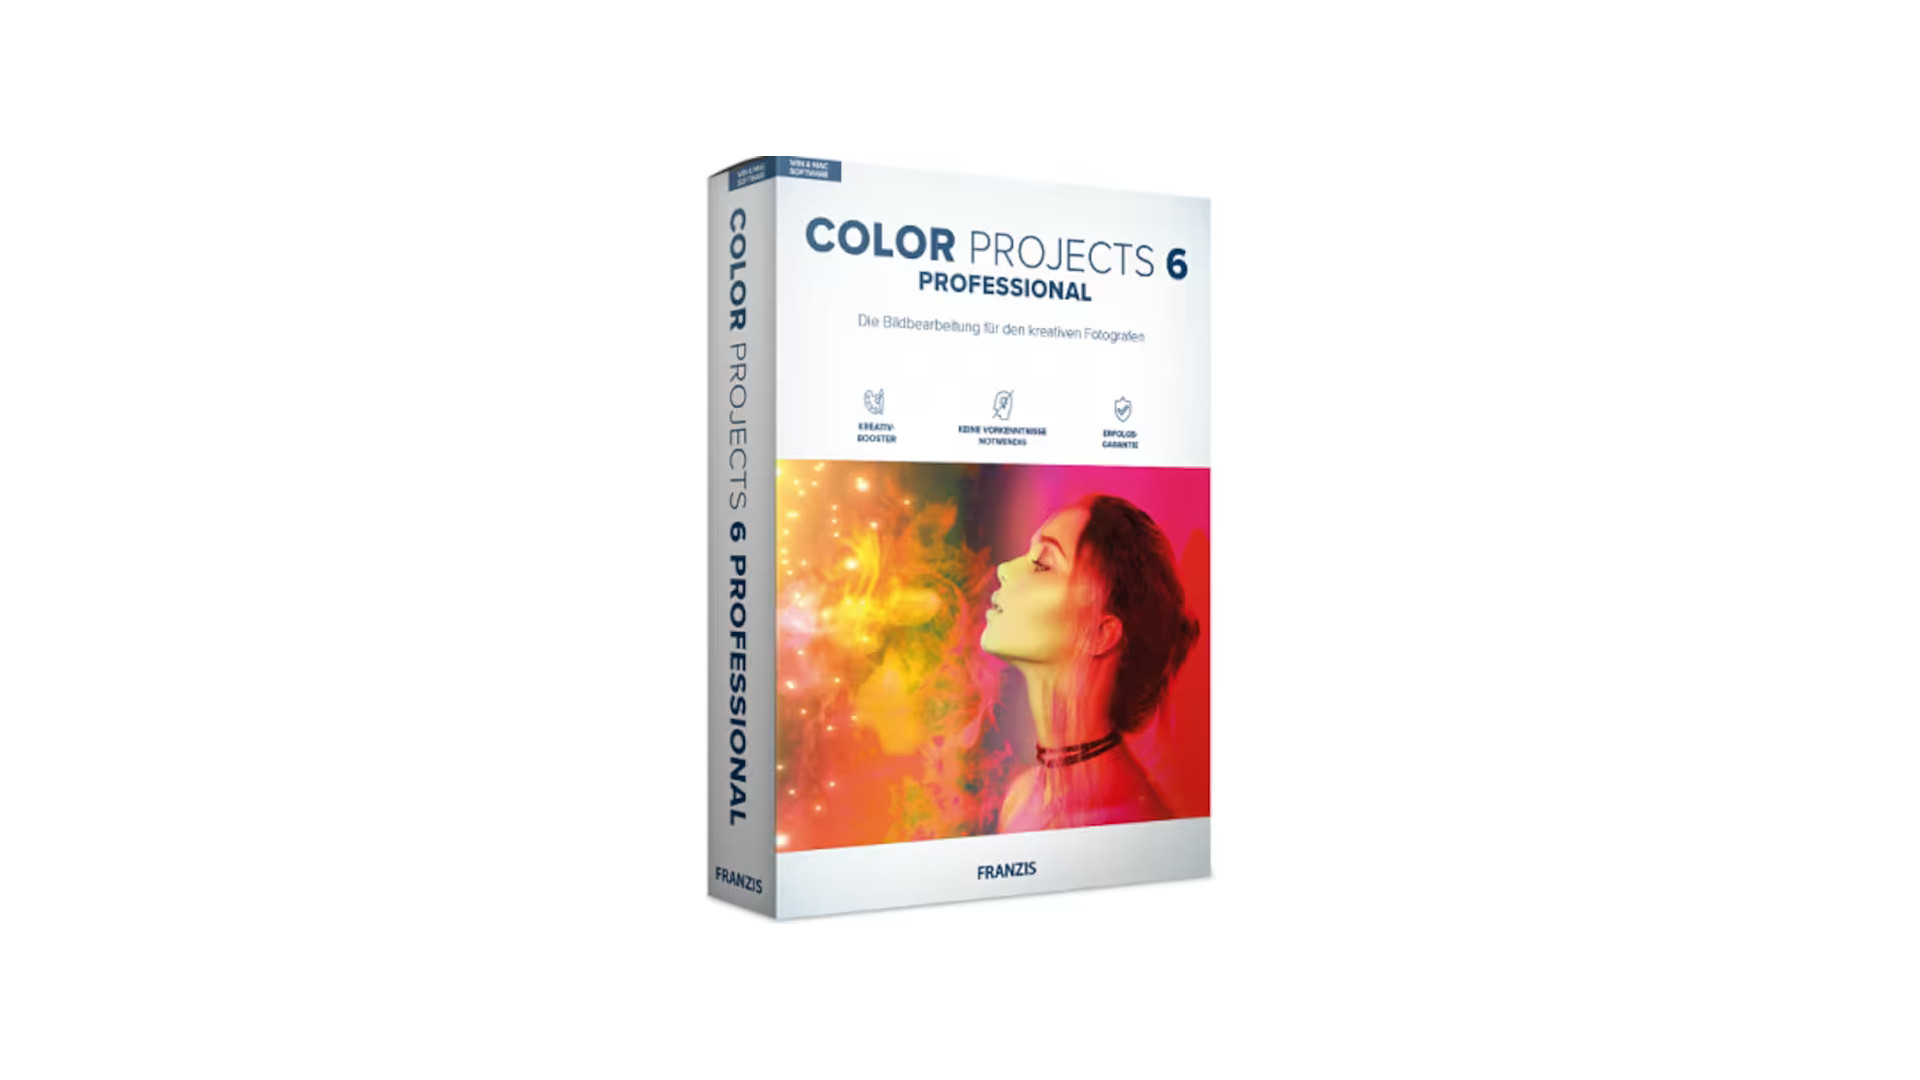 COLOR projects 6 Pro - Project Software Key (Lifetime / 1 PC) 33.89 usd